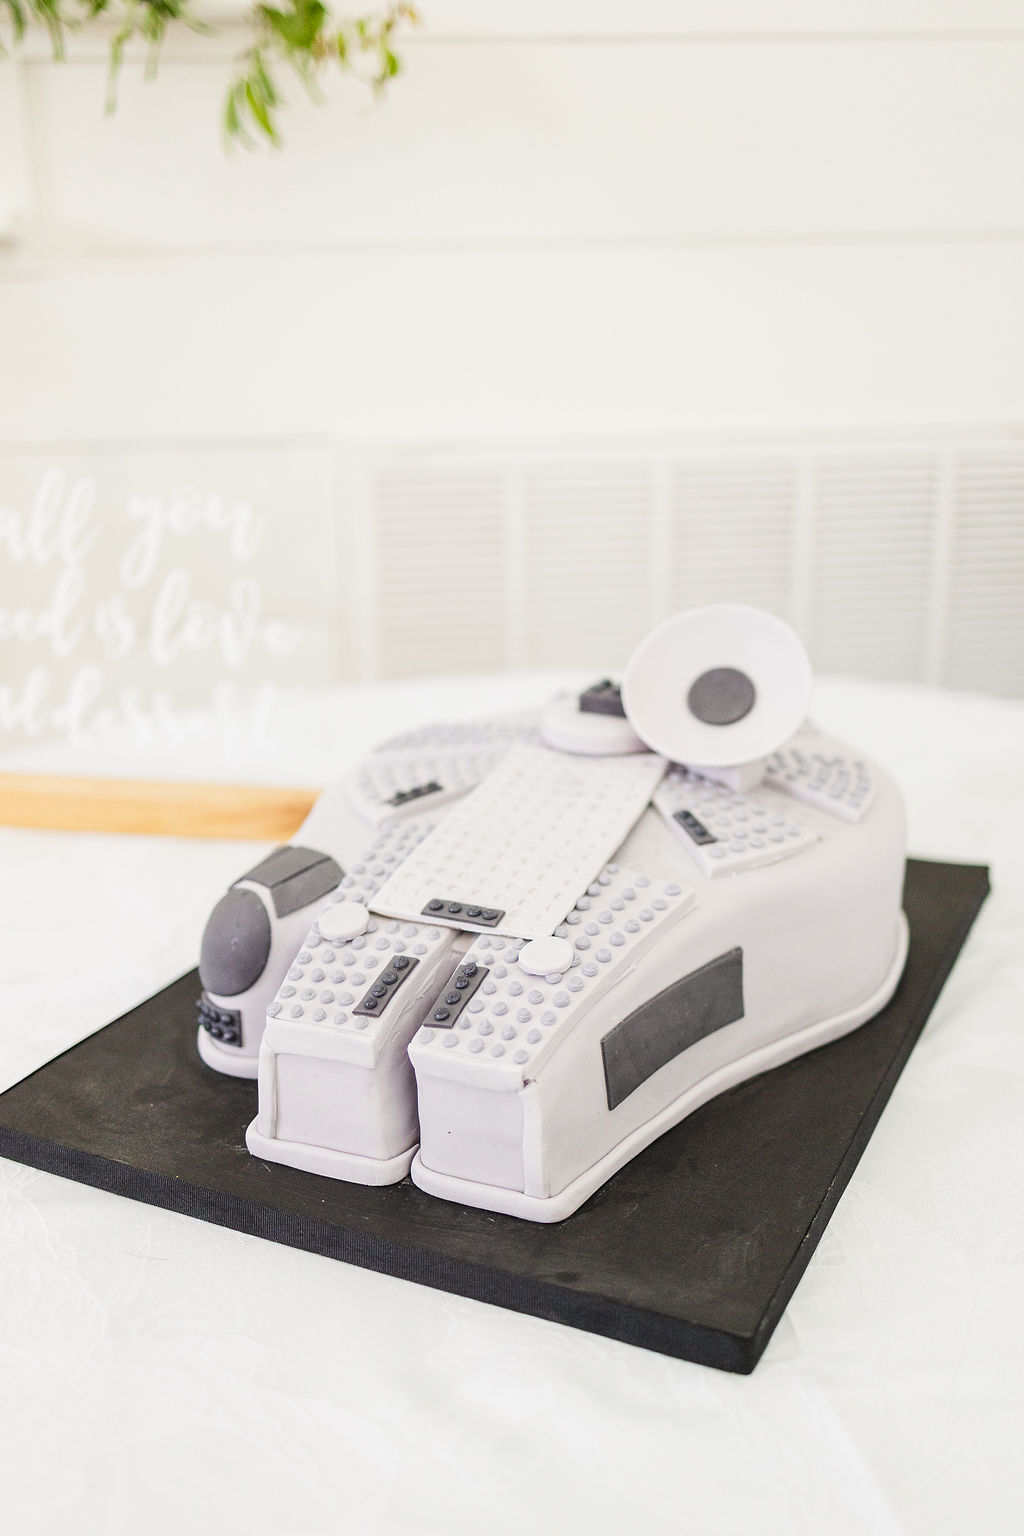 Star Wars groom's cake